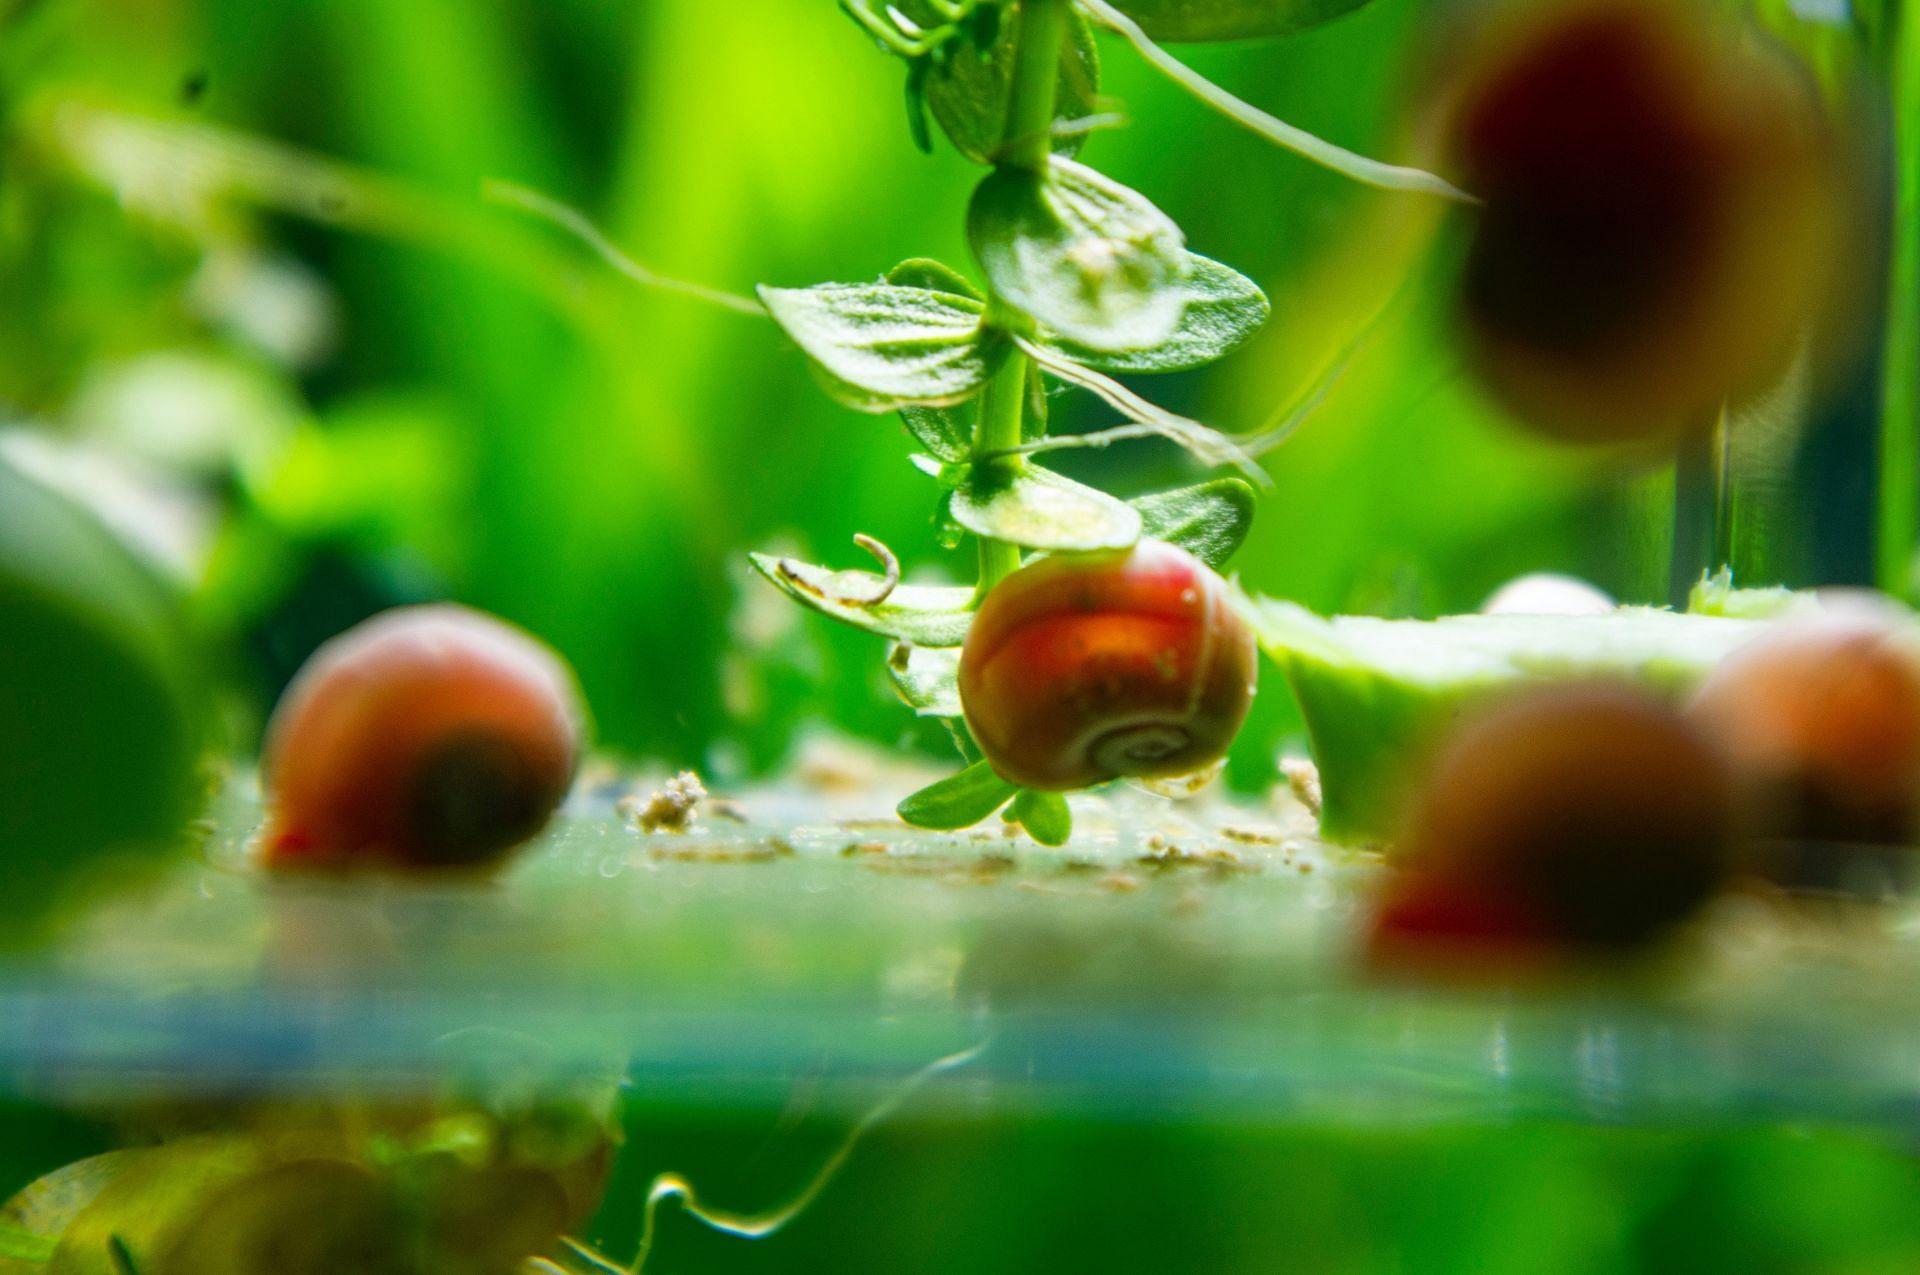 Snails are farmed commercially for food. (Image via Unsplash/Josephina Kolpachnikof)